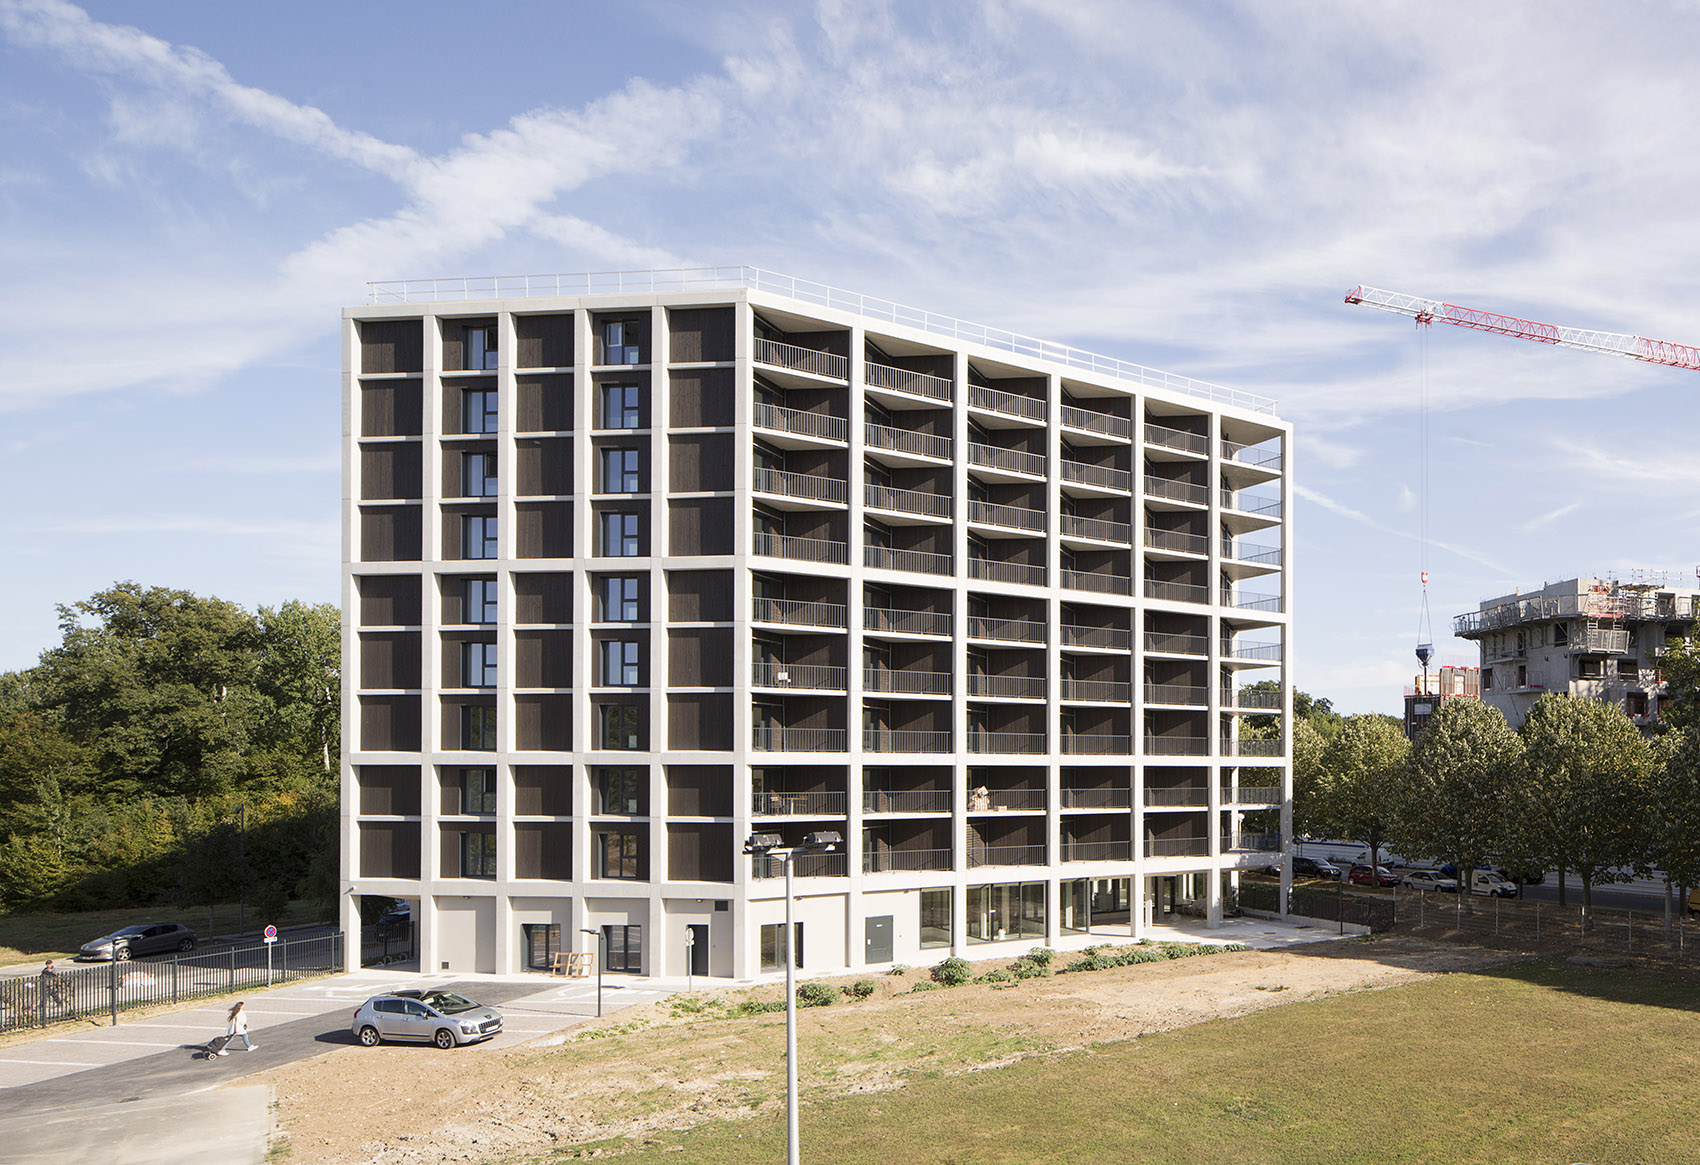 Cité Descartes学生公寓，法国/在个人、集体和城市之间建立统一的连接-52